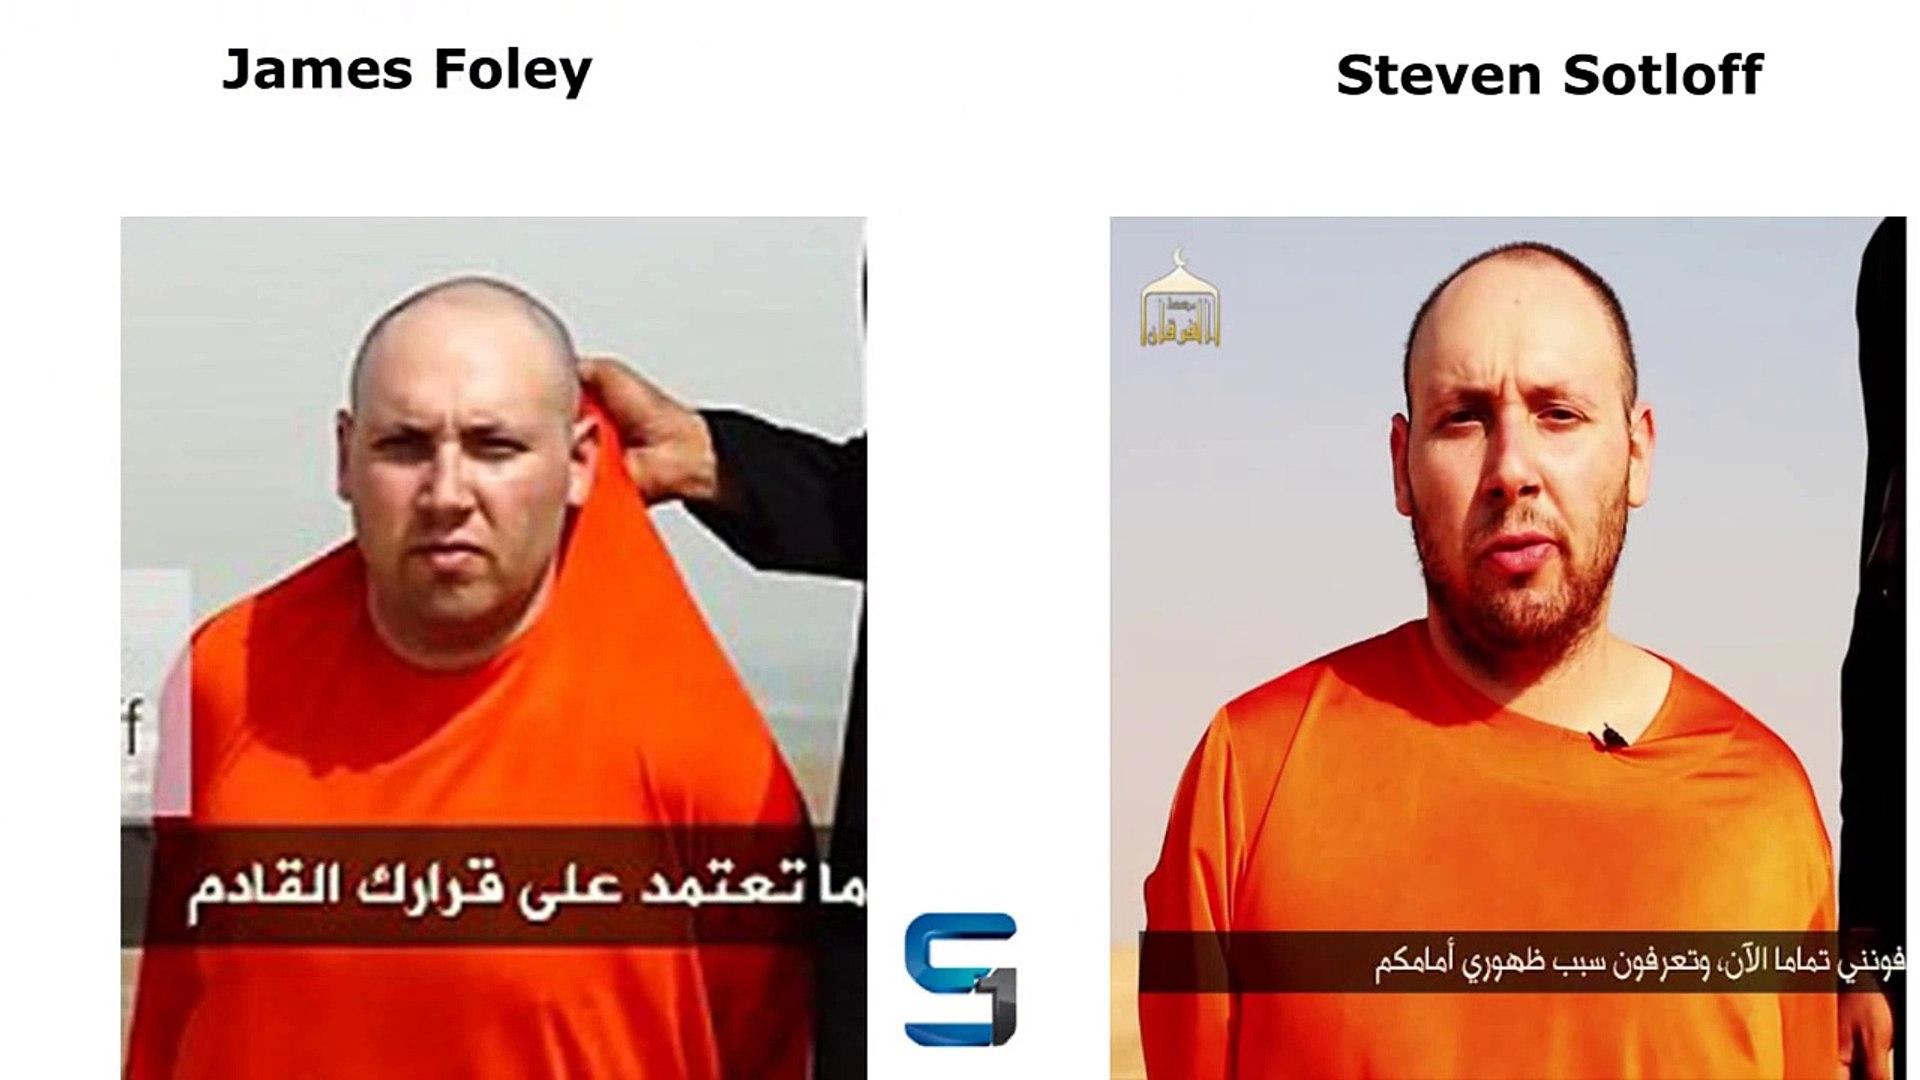 Steven Sotloff Beheading strikingly similar to James Foley - A close  comparision - video Dailymotion